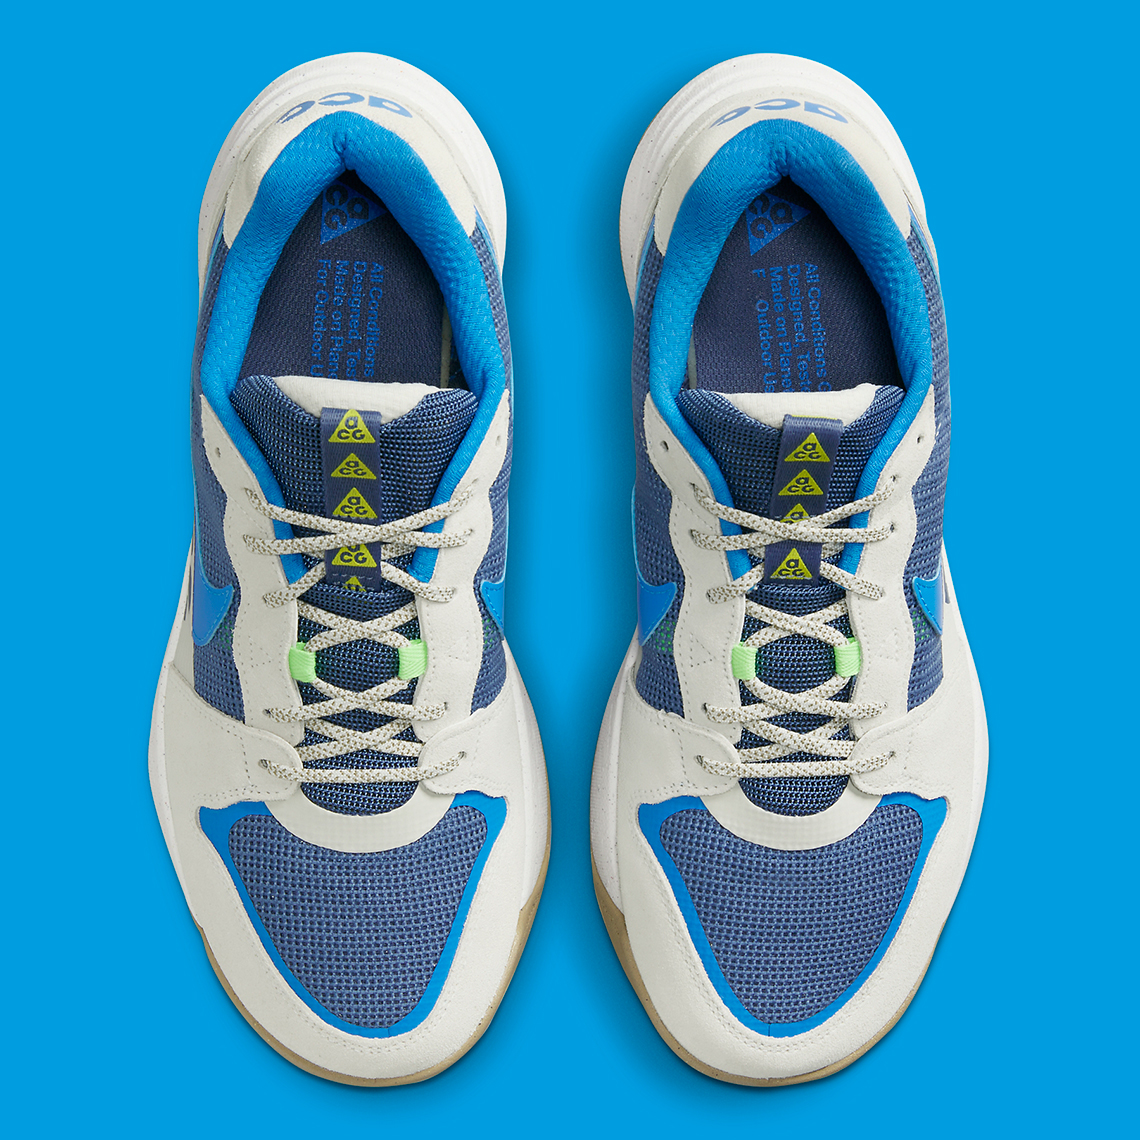 Nike Acg Lowcate Light Bone Light Photo Blue Diffused Blue Dm8019 005 3